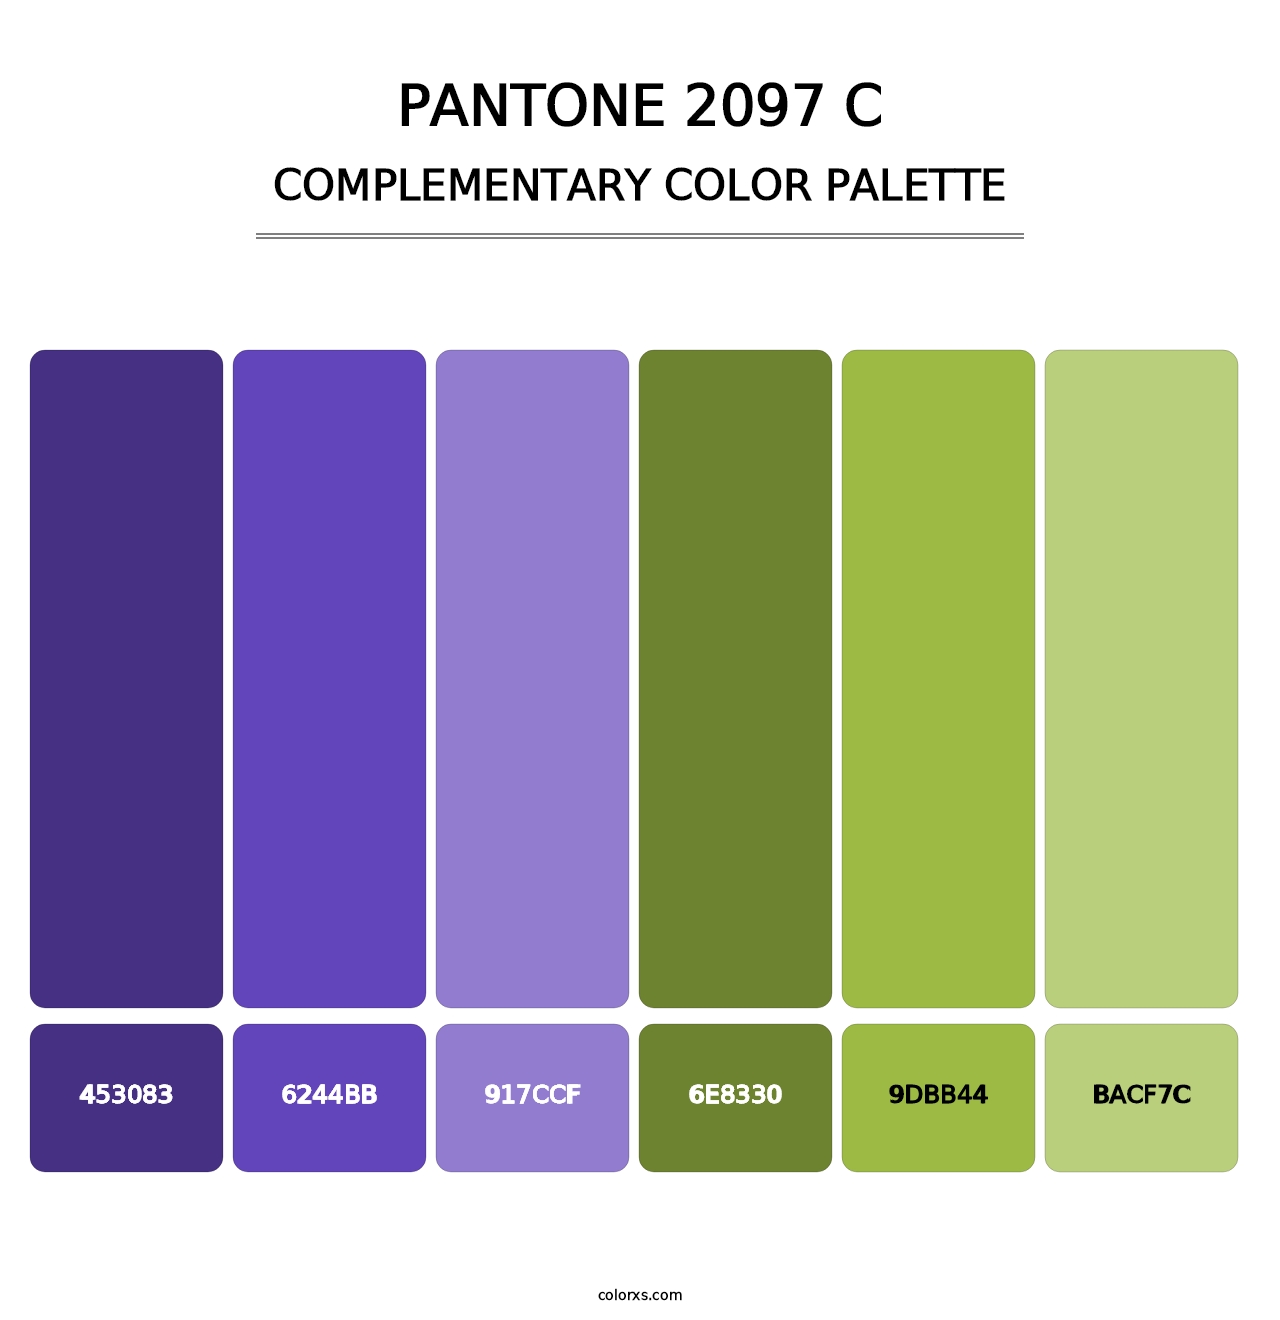 PANTONE 2097 C - Complementary Color Palette